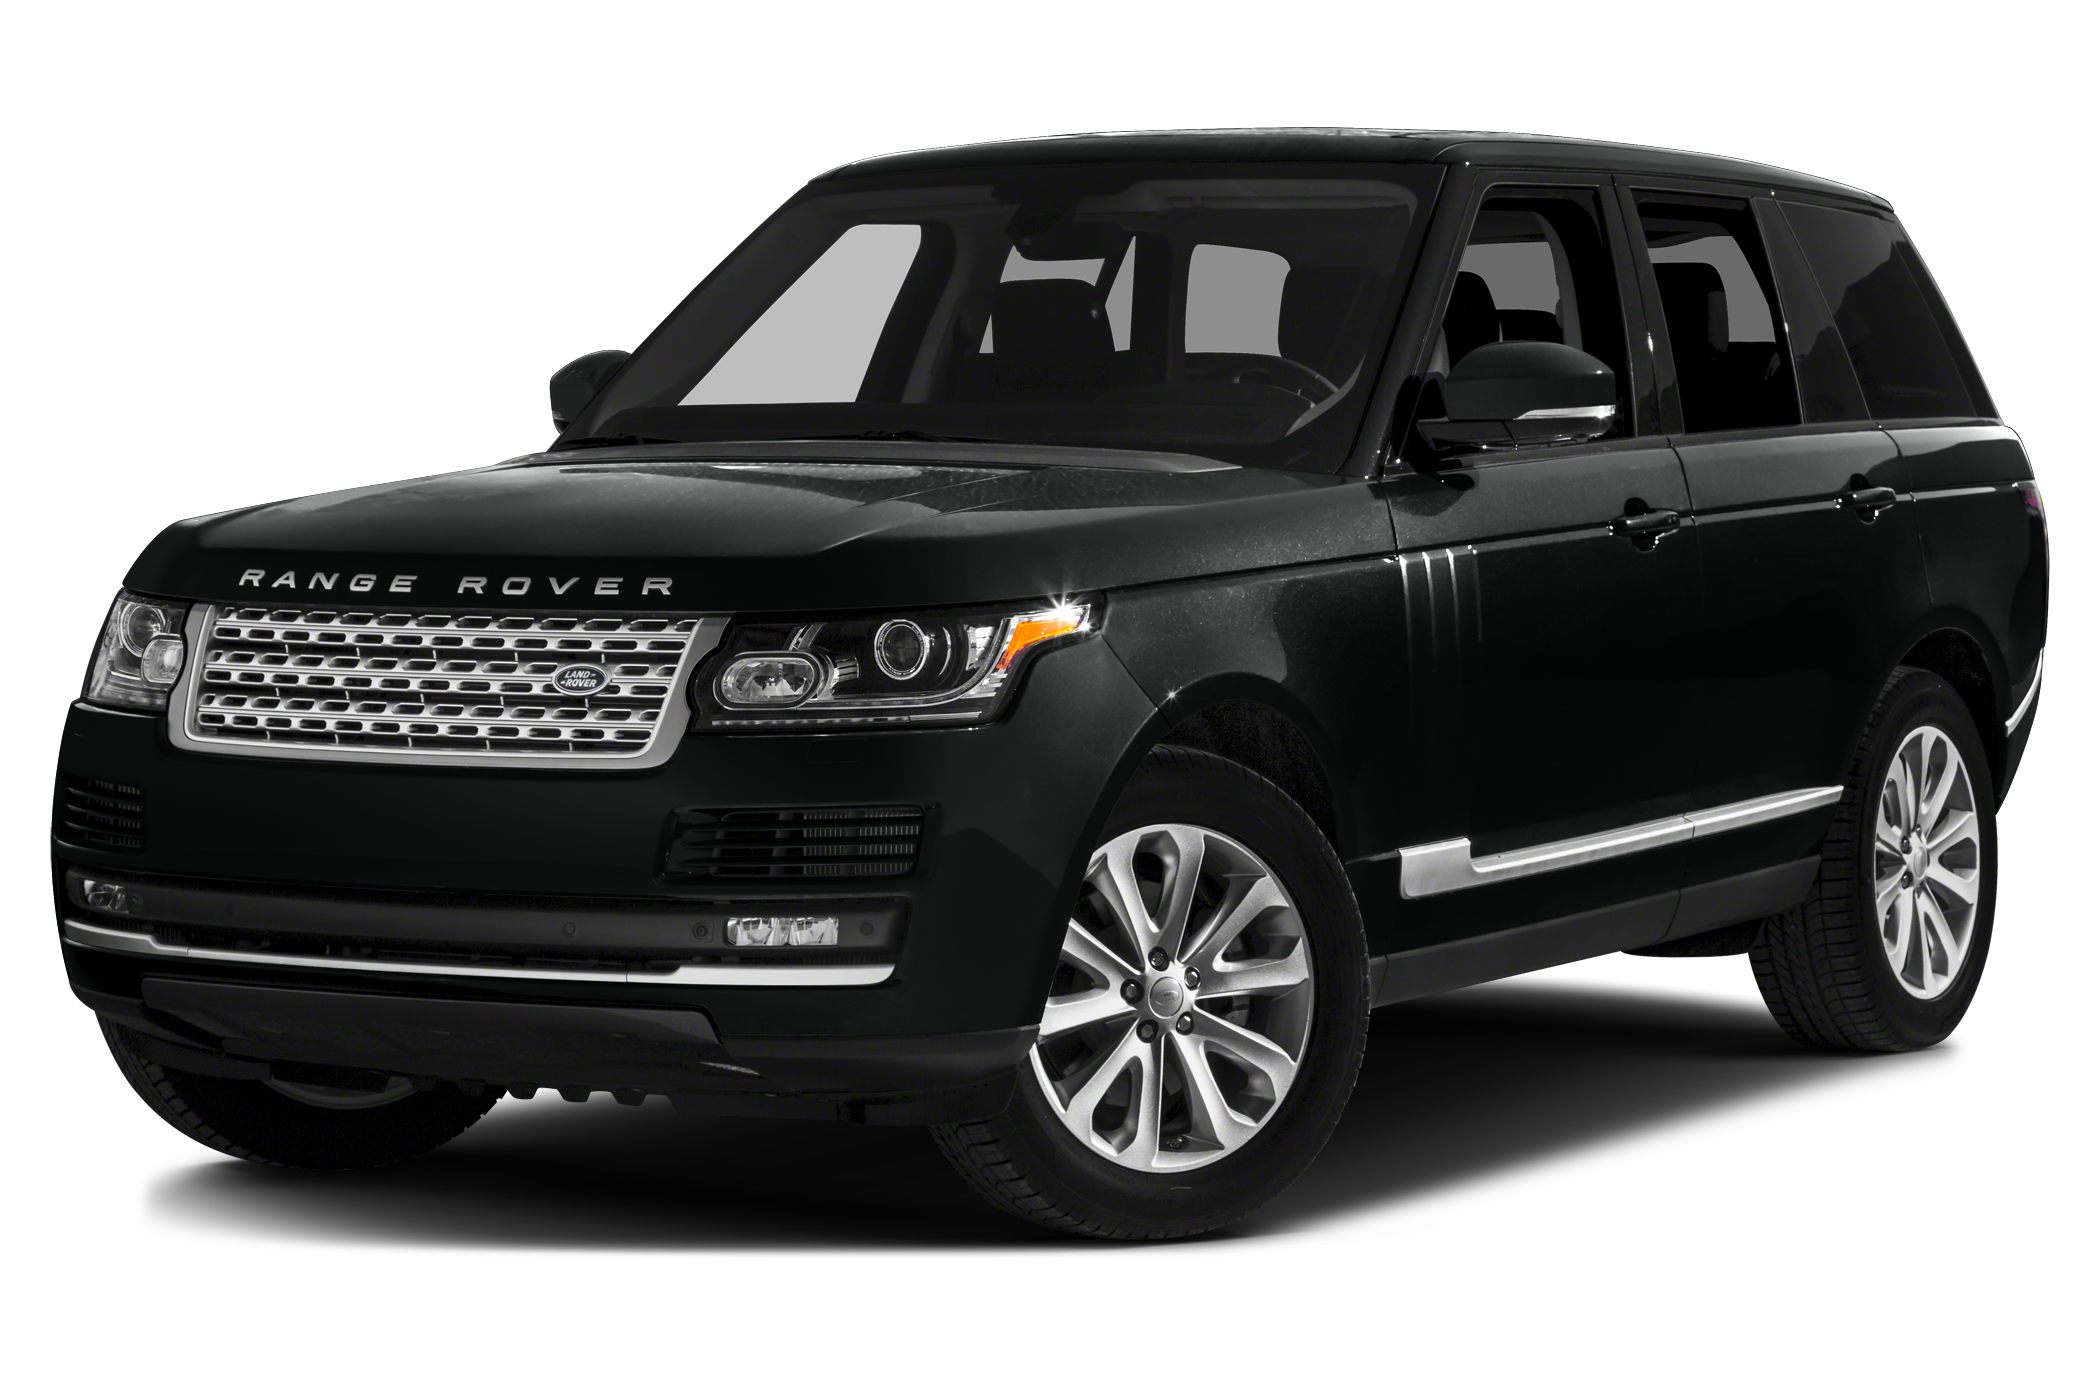 2015 Land Rover Range Rover Information